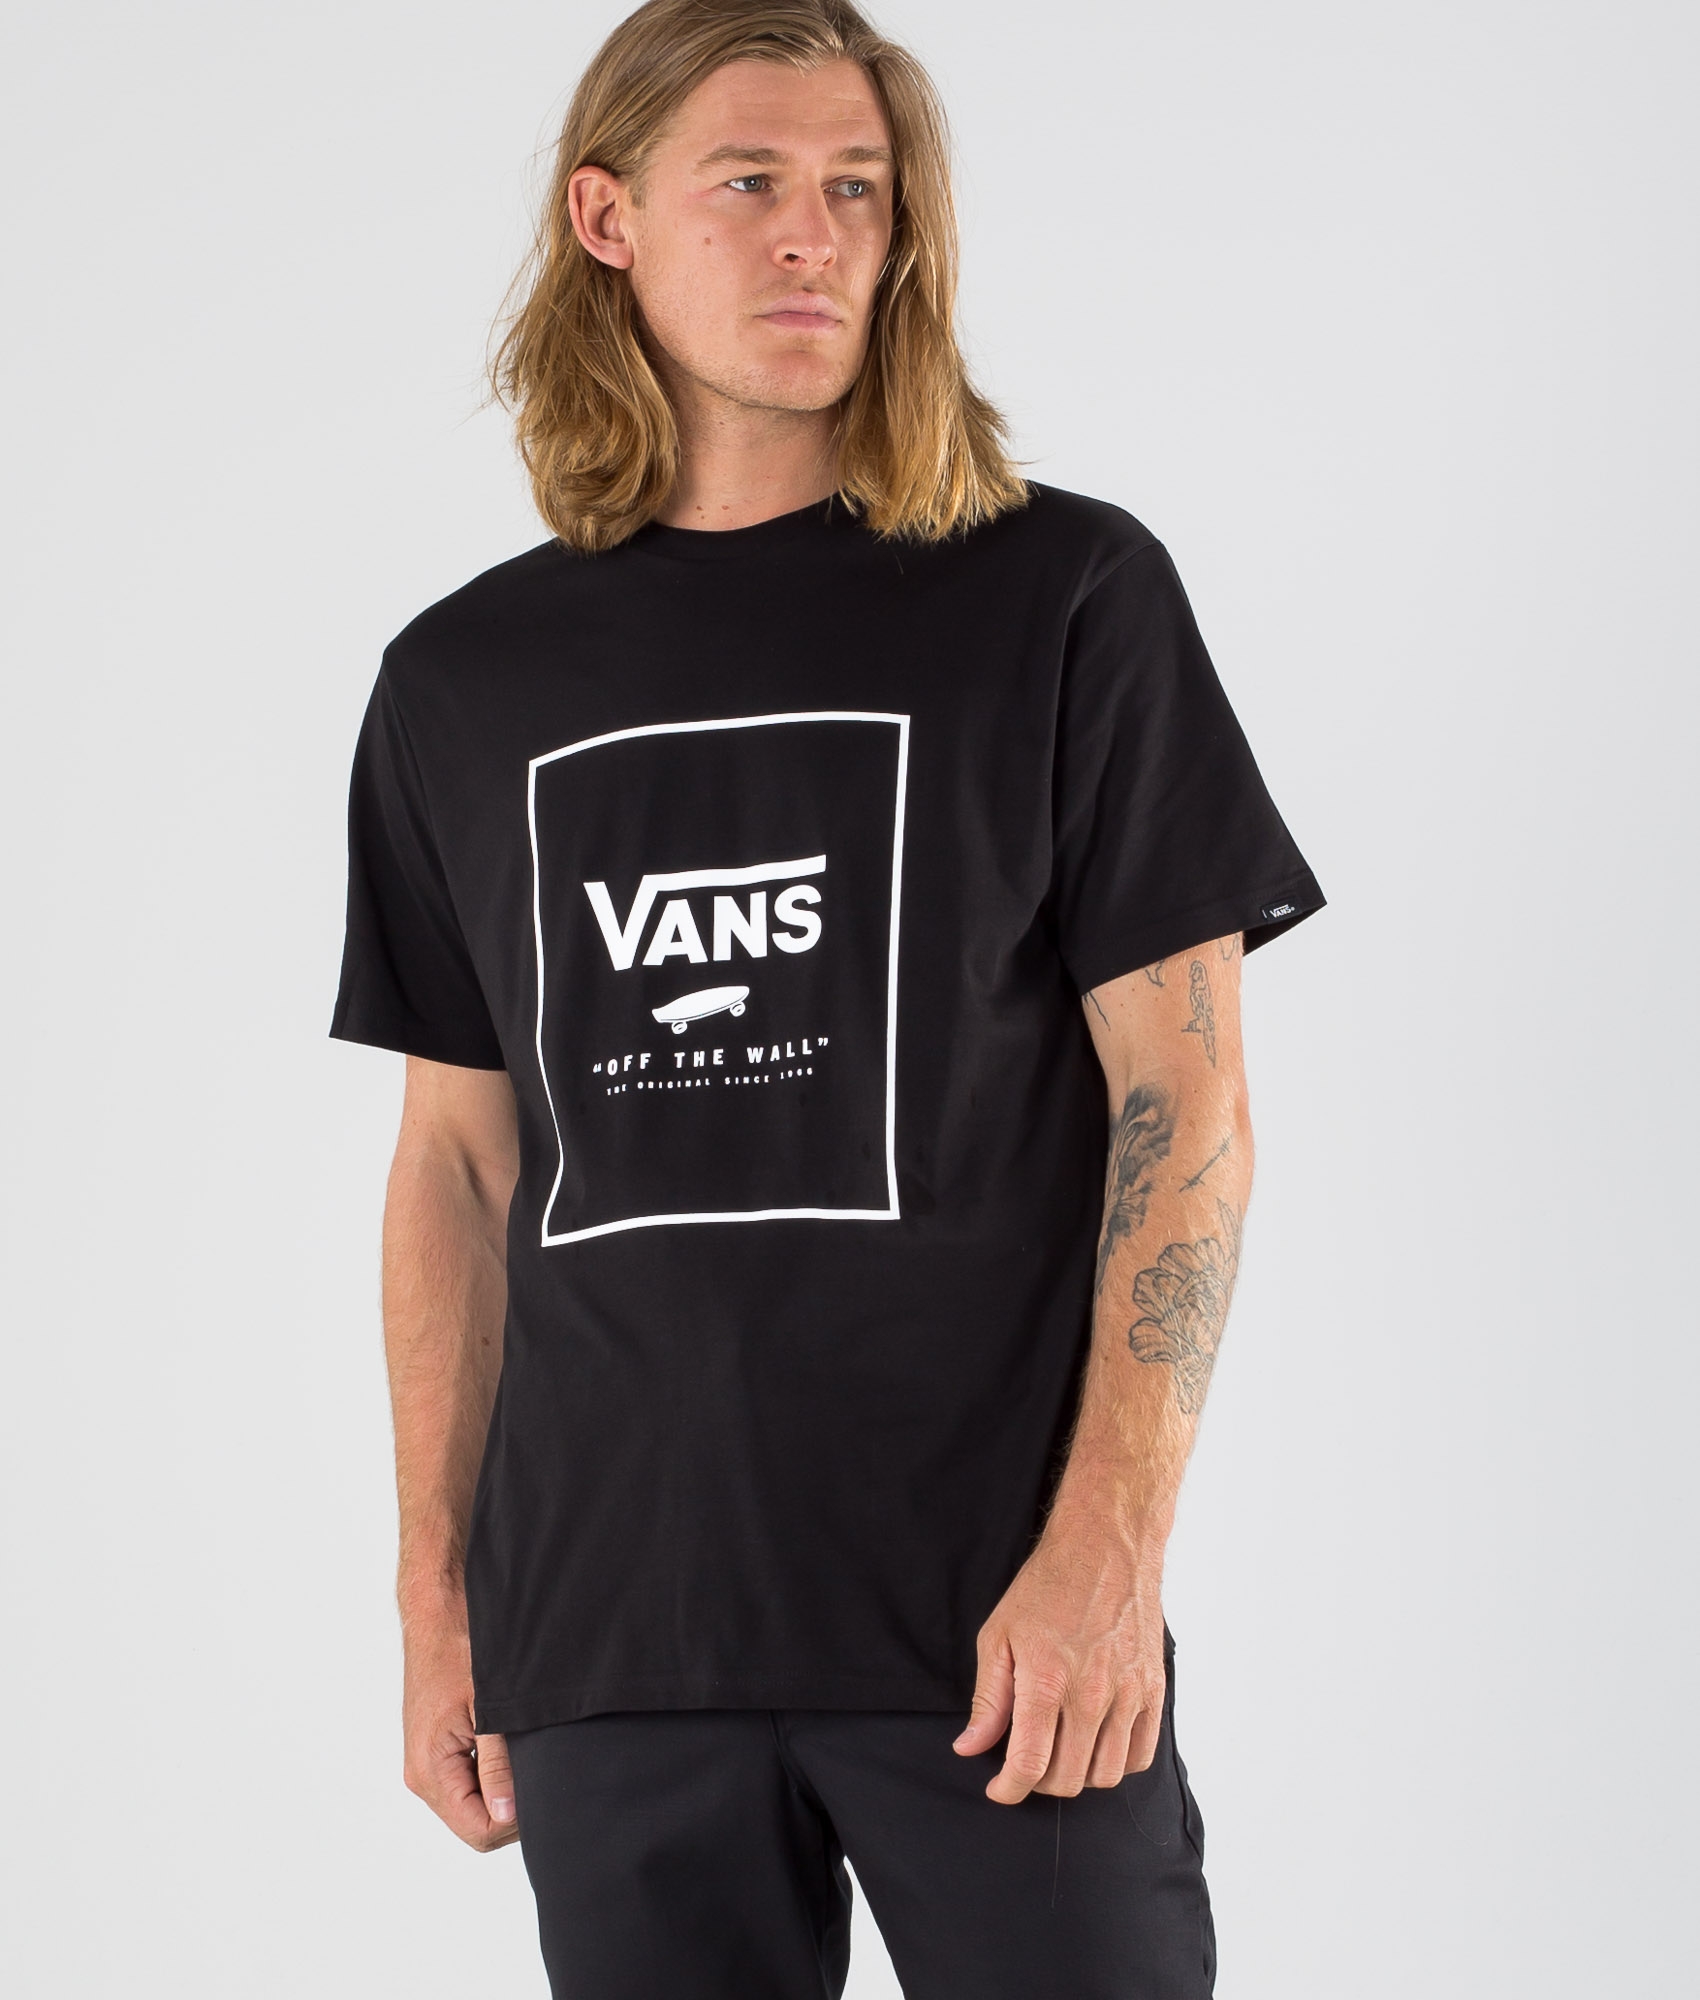 vans shirt black